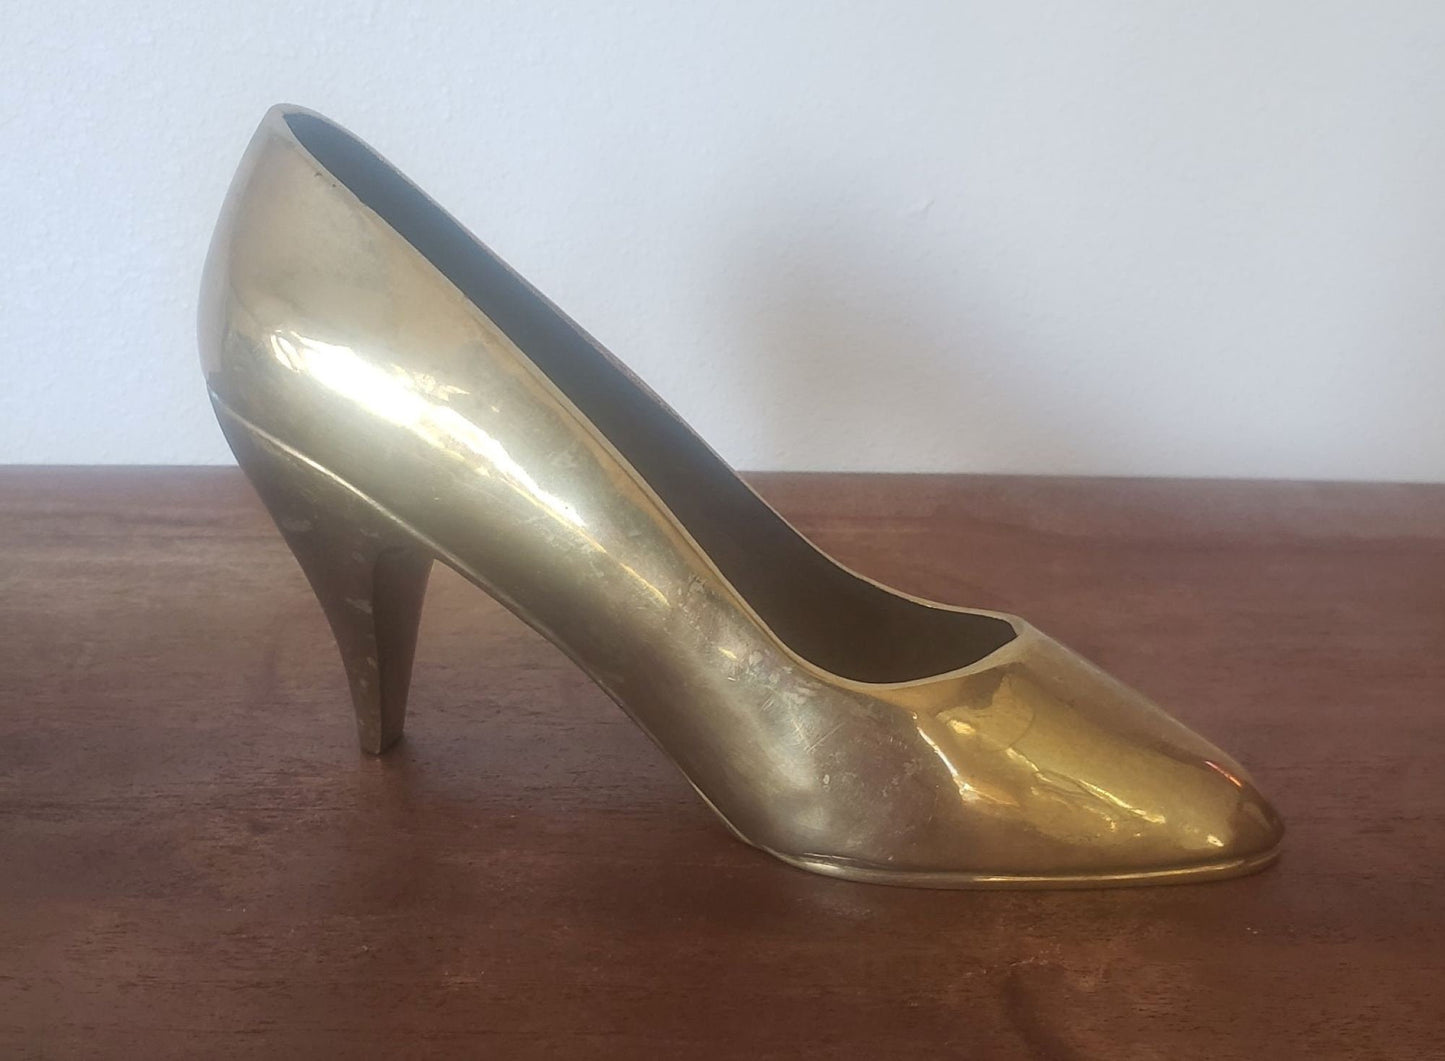 Vintage Brass Shoe Figurine - Unique High Heel Design